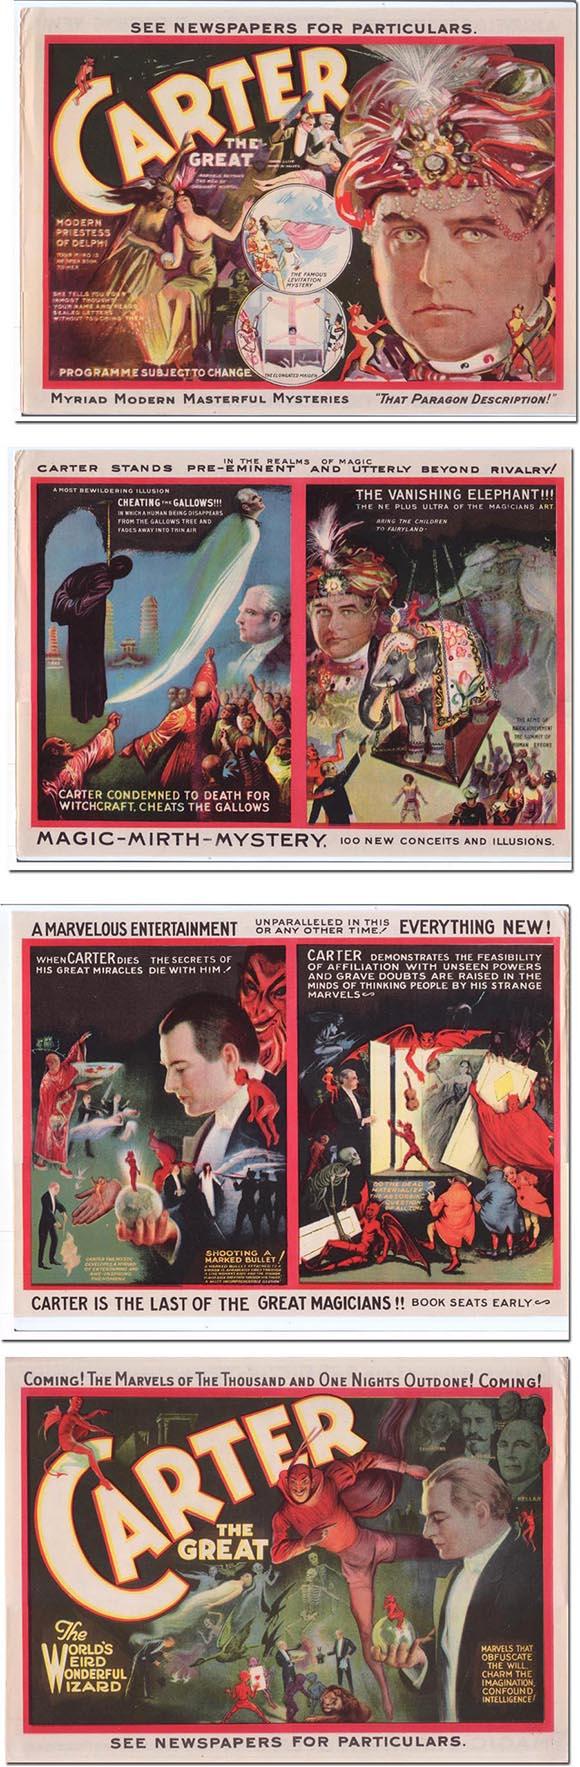 1926 Carter the Great, Magician, Original Lithographed Poster Salesman Samples